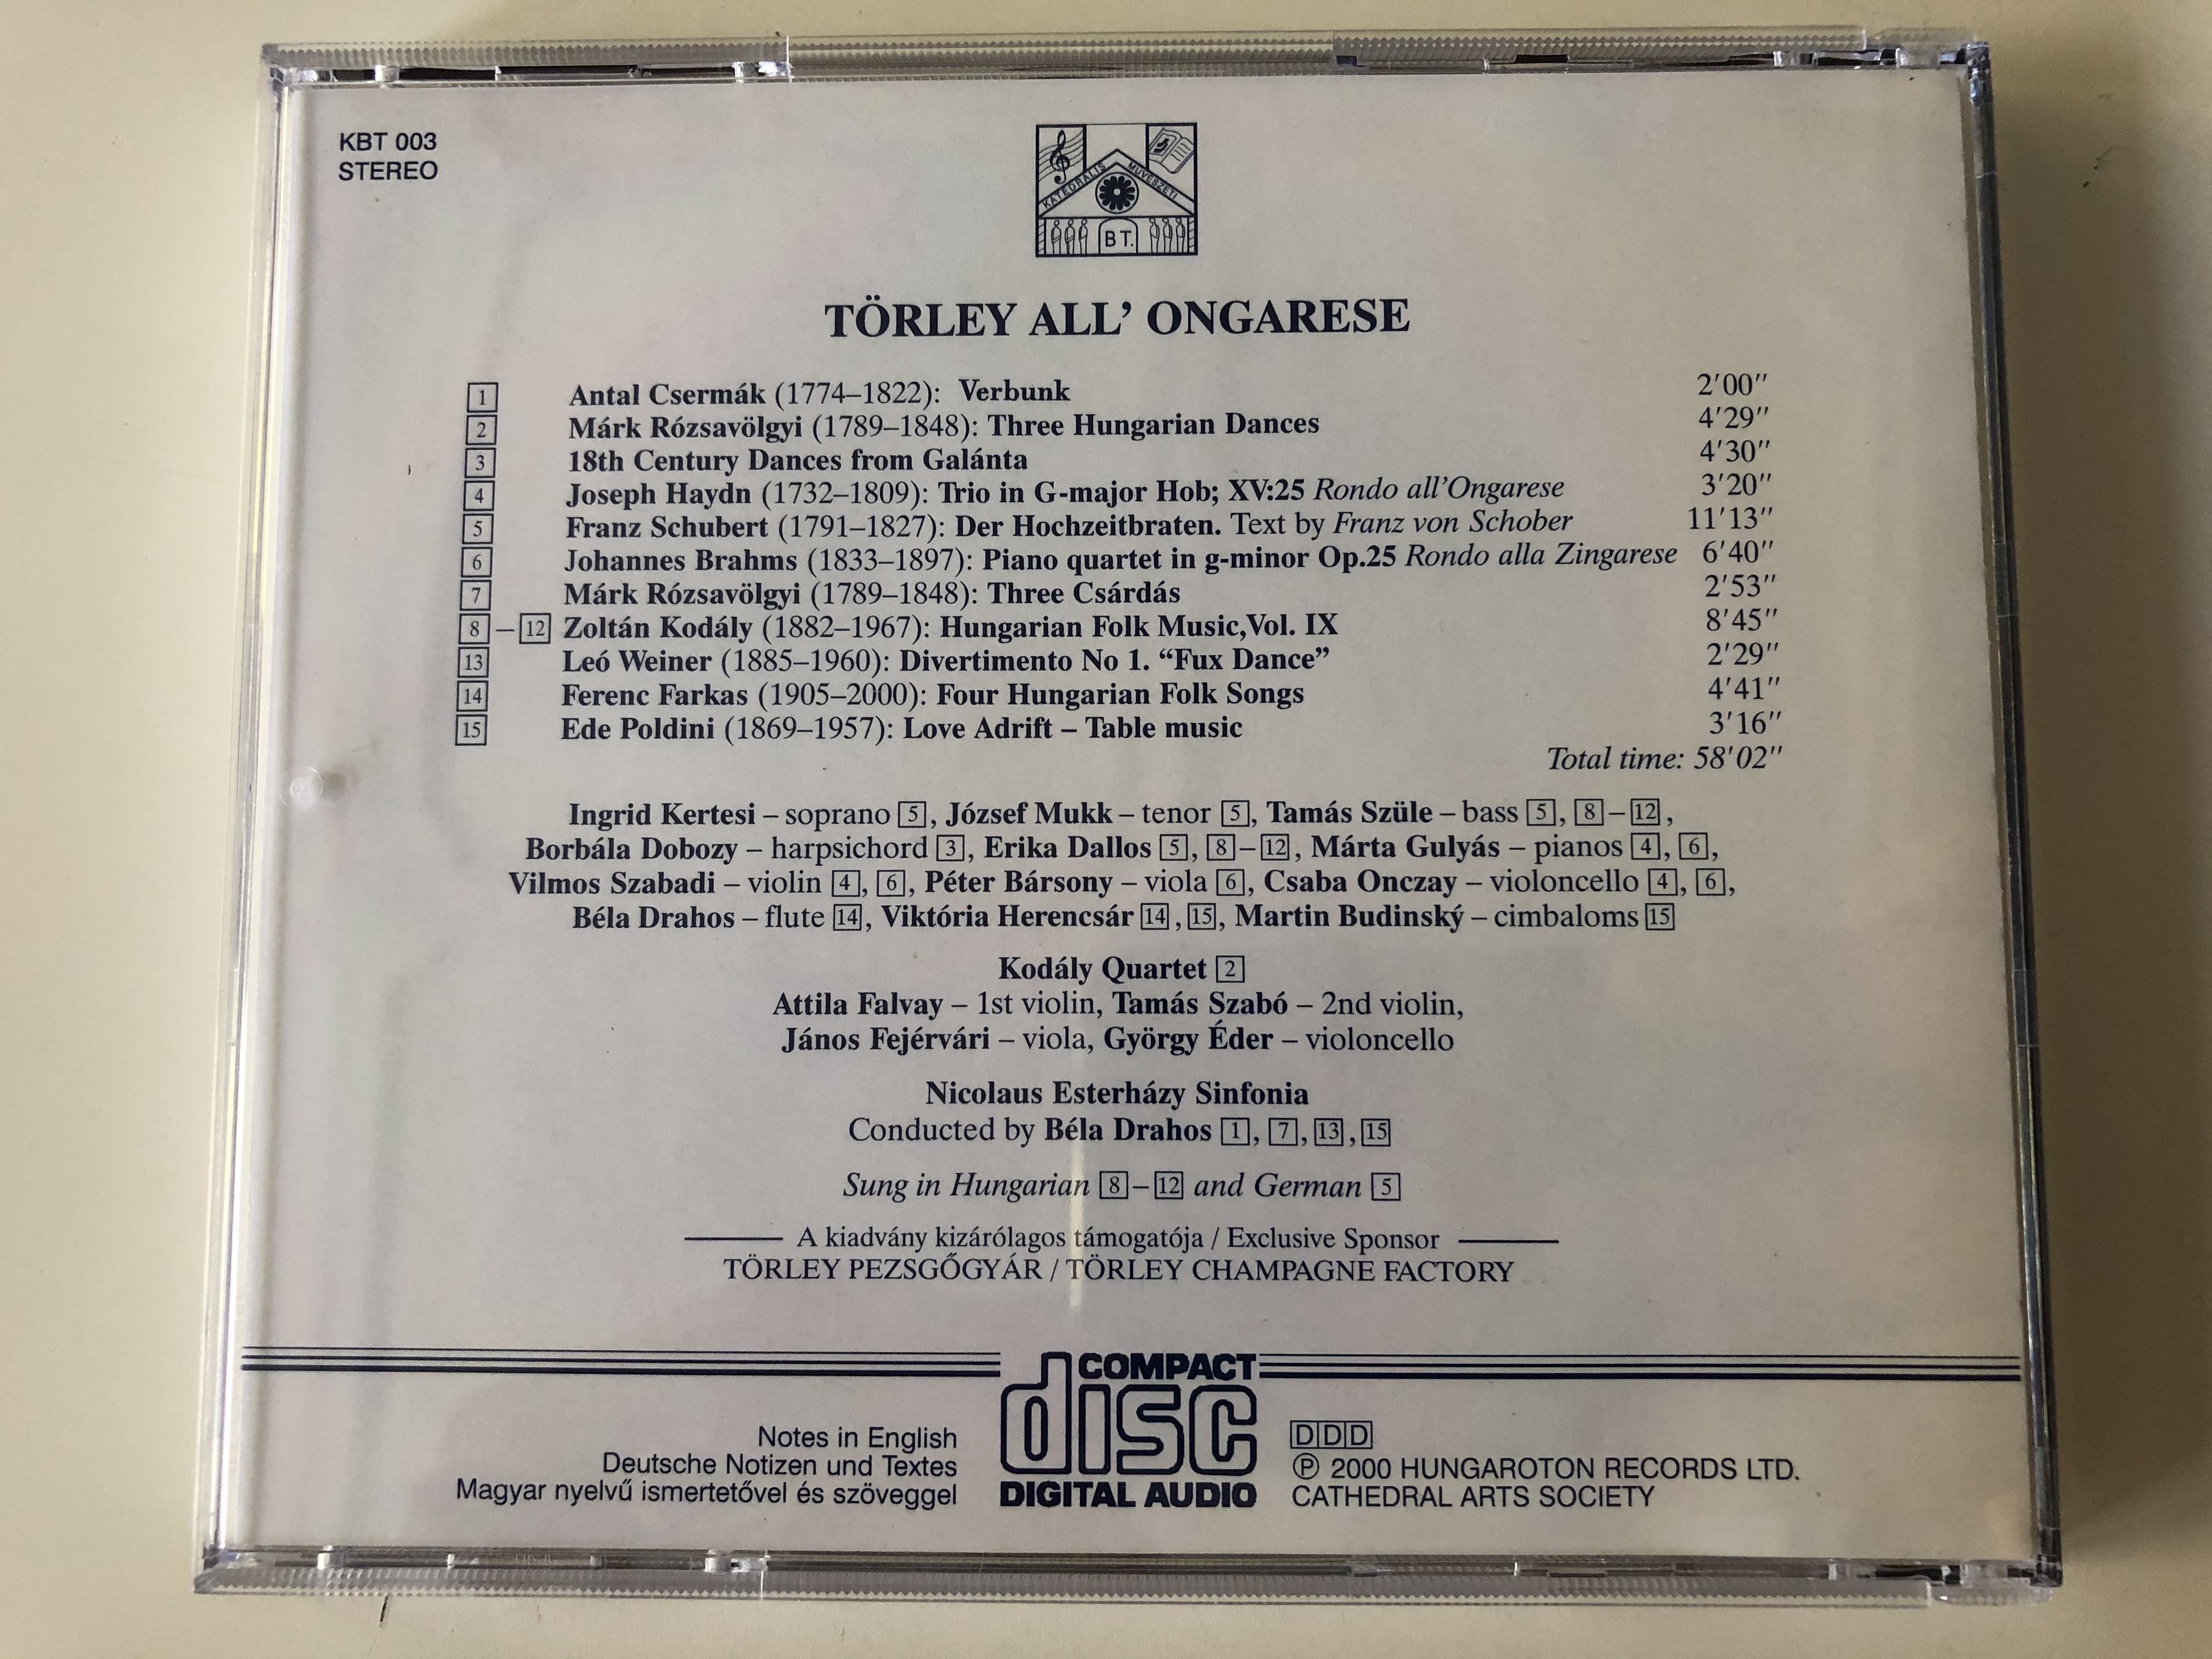 torley-all-ongarese-katedralis-muveszeti-bt.-audio-cd-2000-stereo-kbt-003-13-.jpg